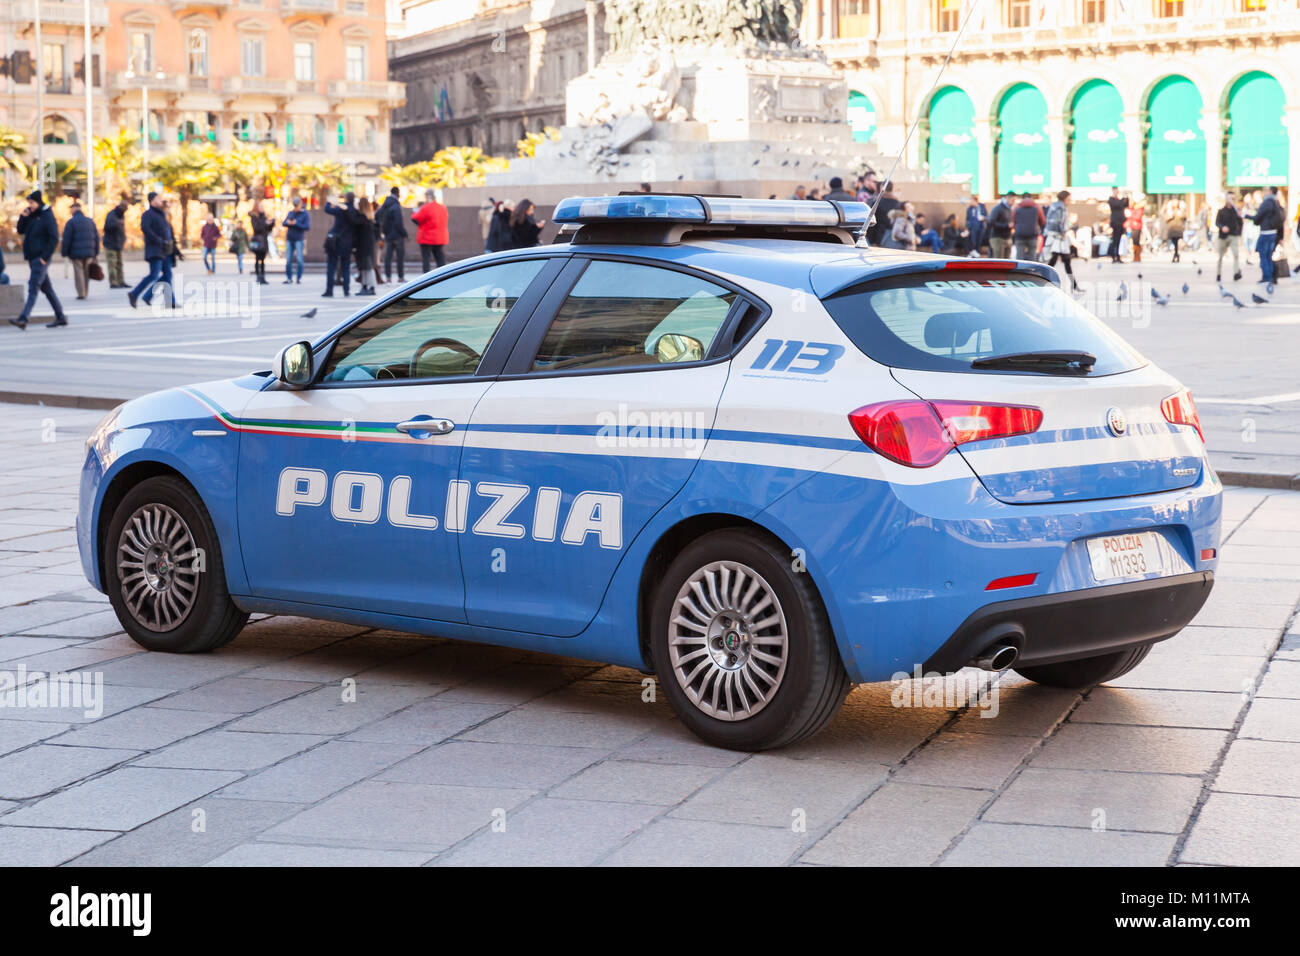 Milano, Italy - January 19, 2018: Blue and white Alfa Romeo Giulietta, Italian police car patrols Piazza del Duomo, central city square of Milano, rea Stock Photo